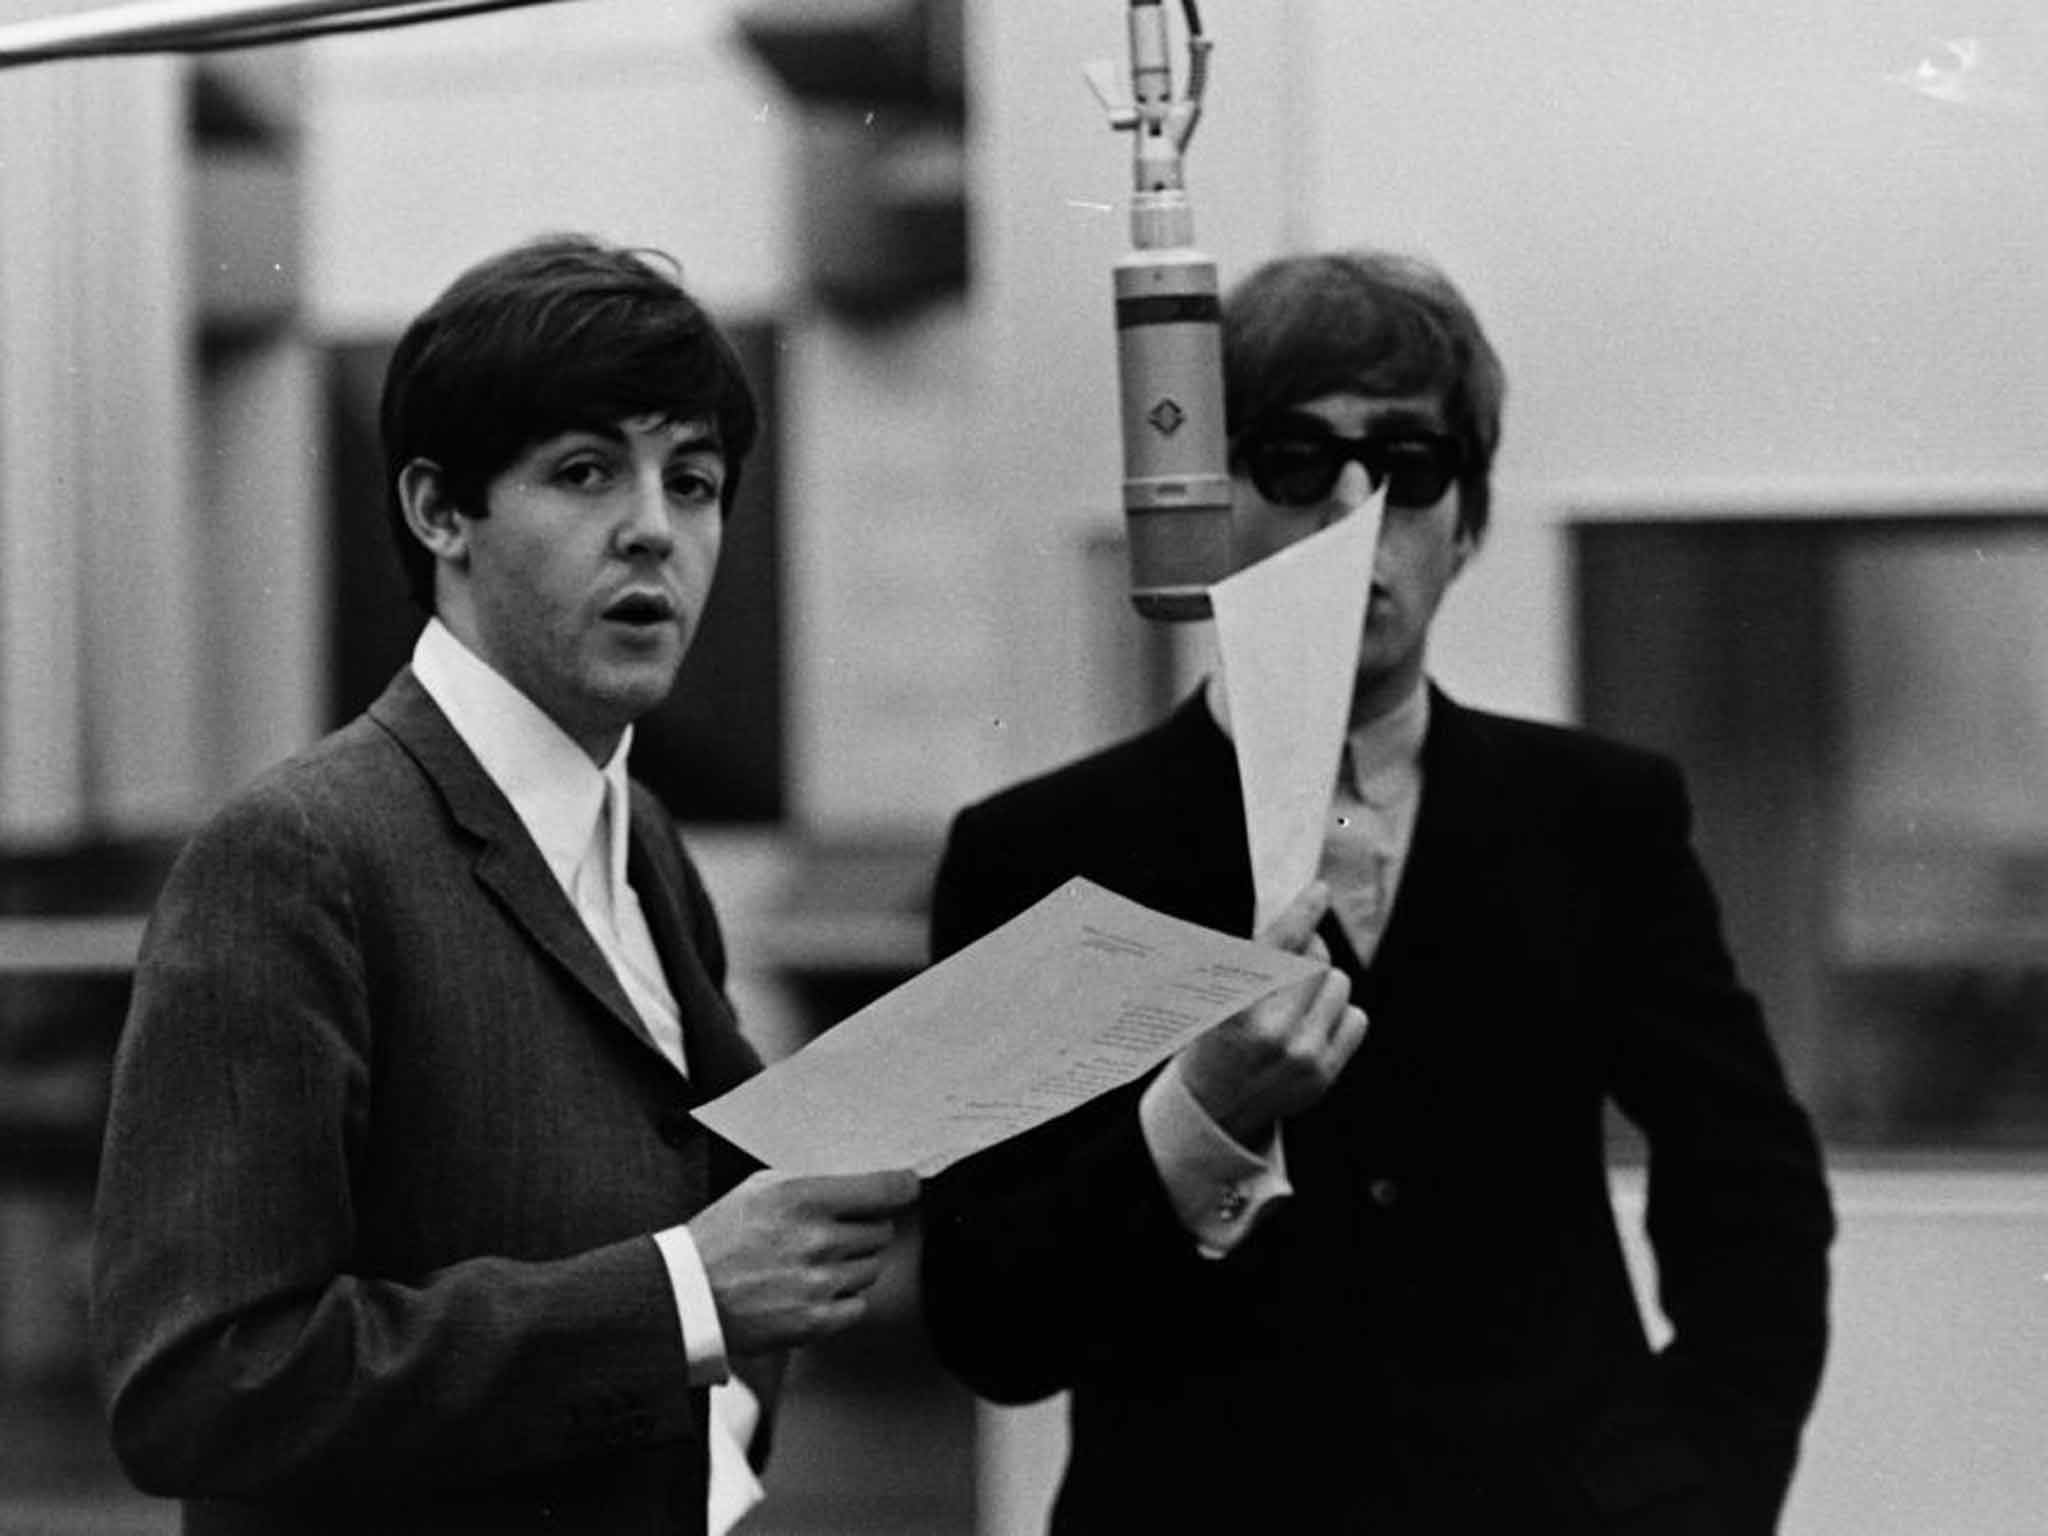 Ringo Starr's photos of The Beatles